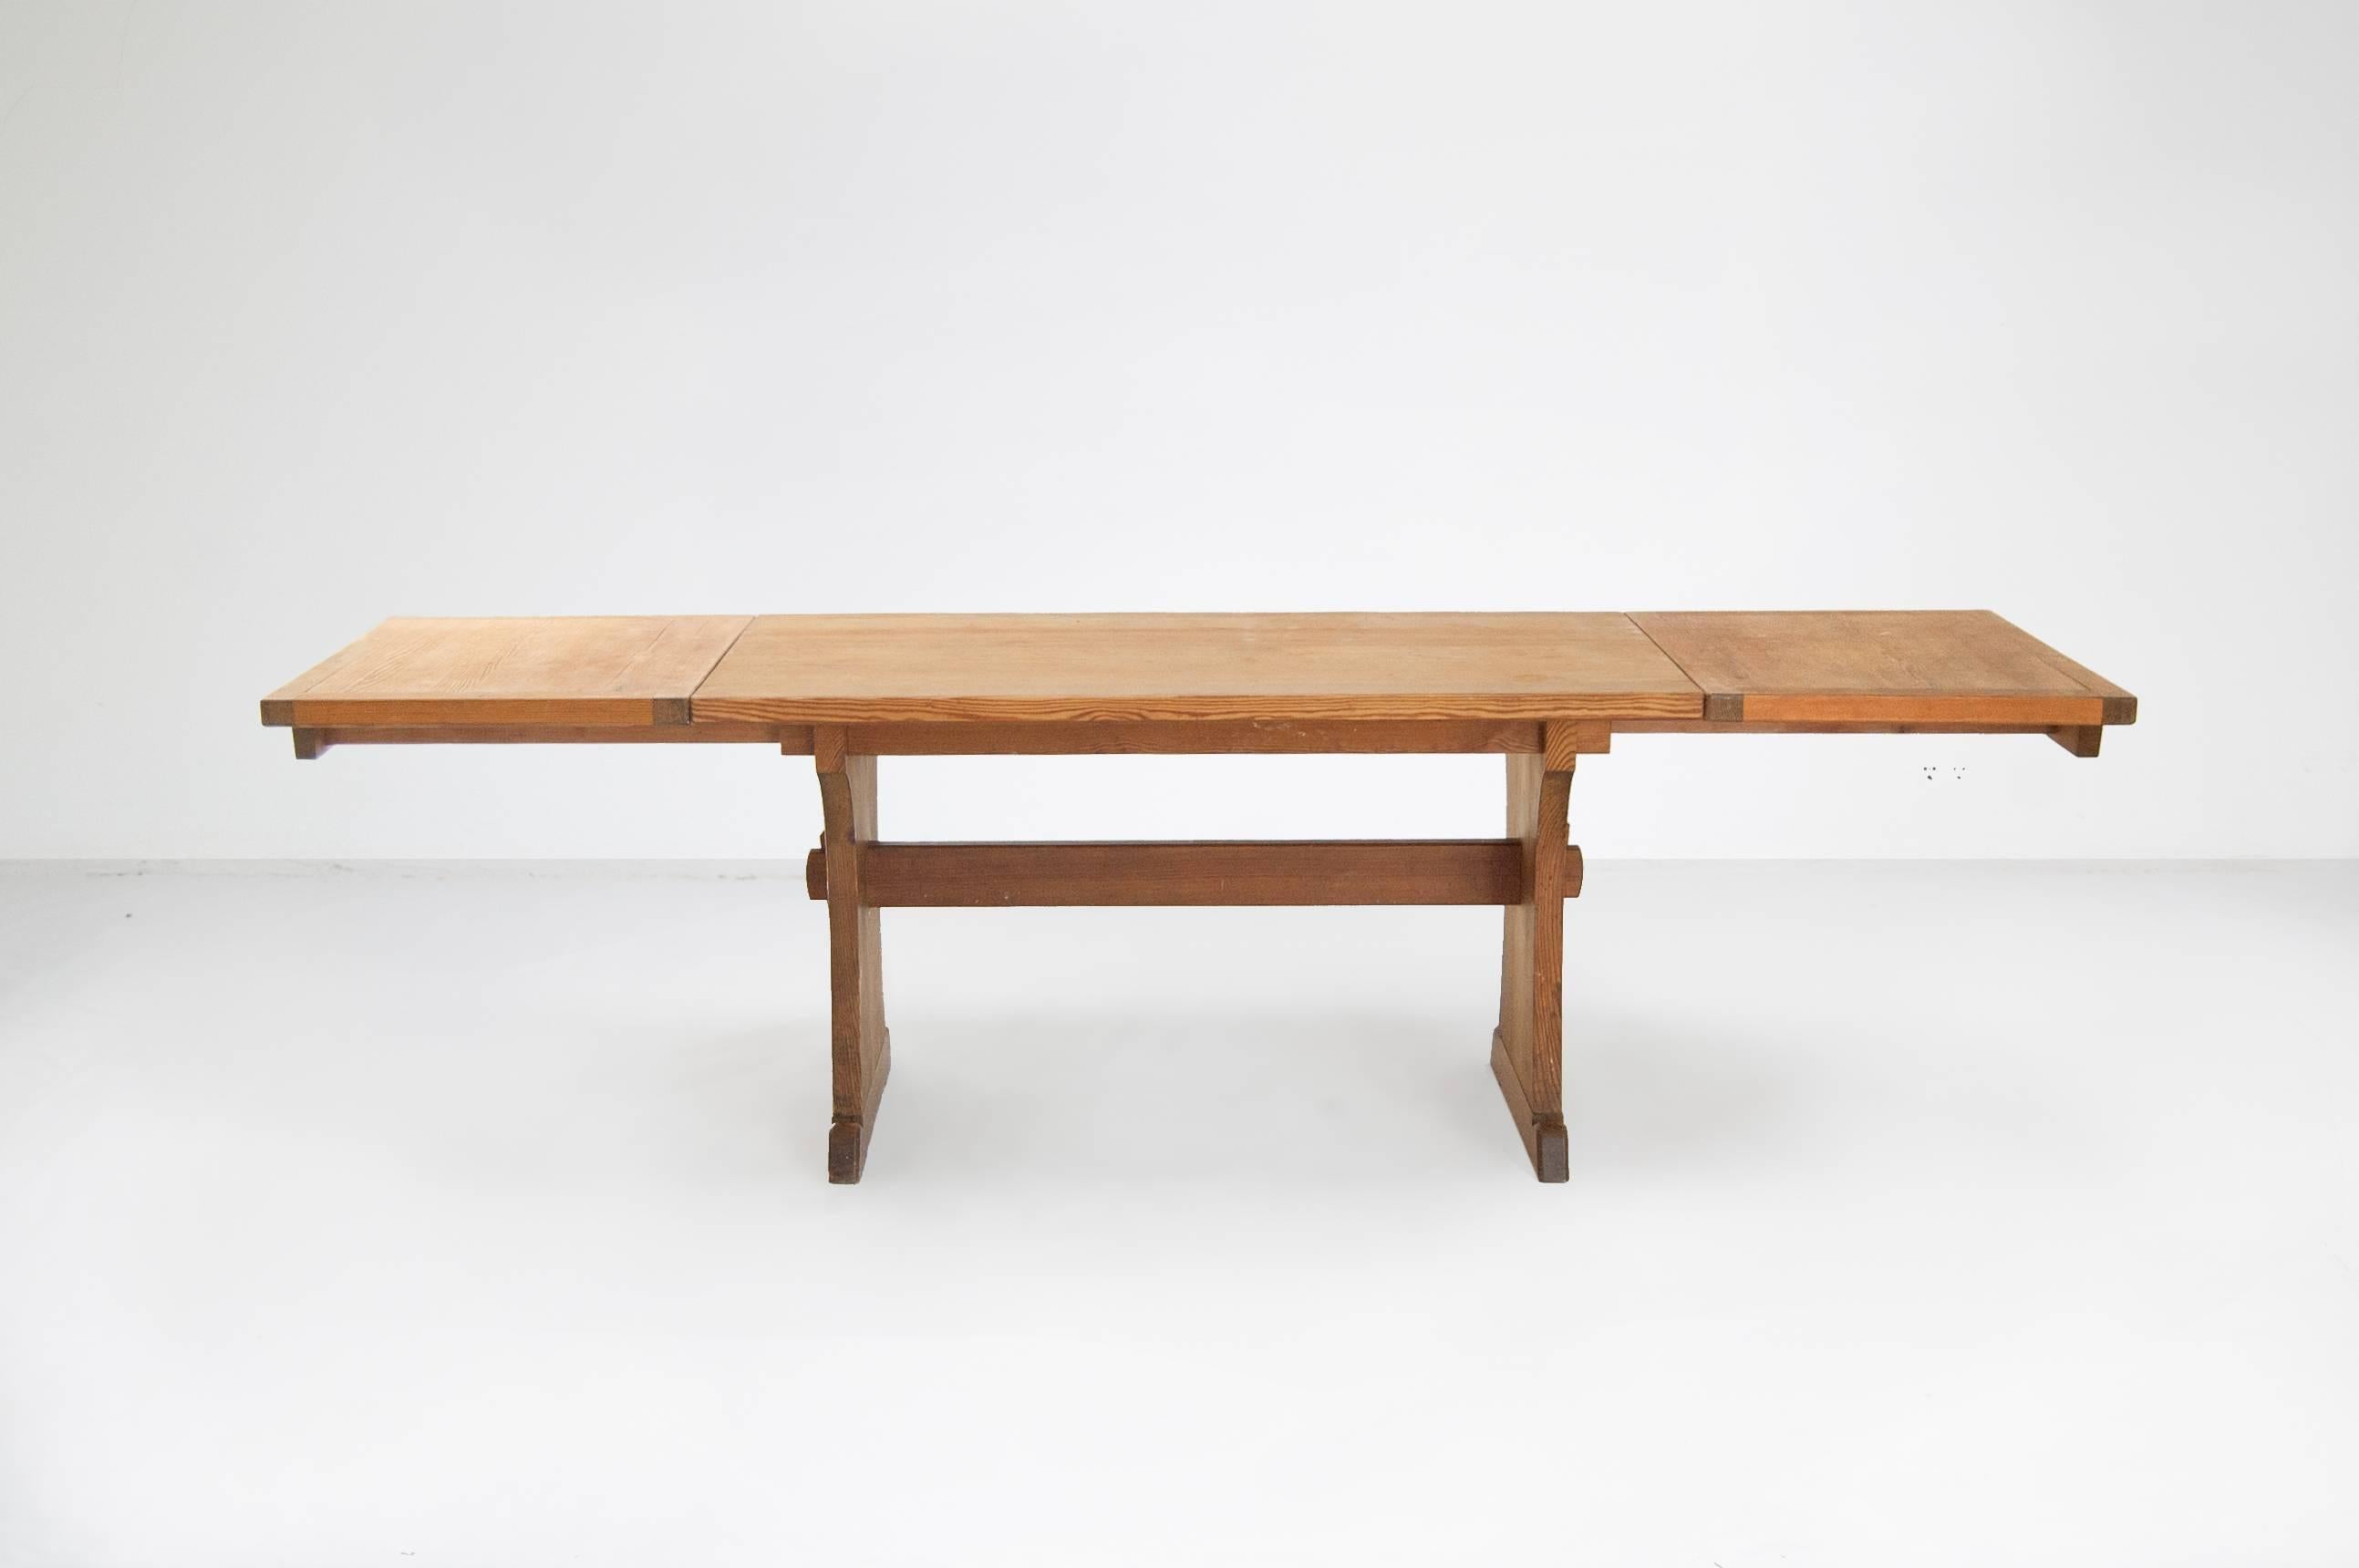 Mid-Century Modern Axel Einar Hjorth Extendable Sold Pine Dining Table 20th century Swedish design 